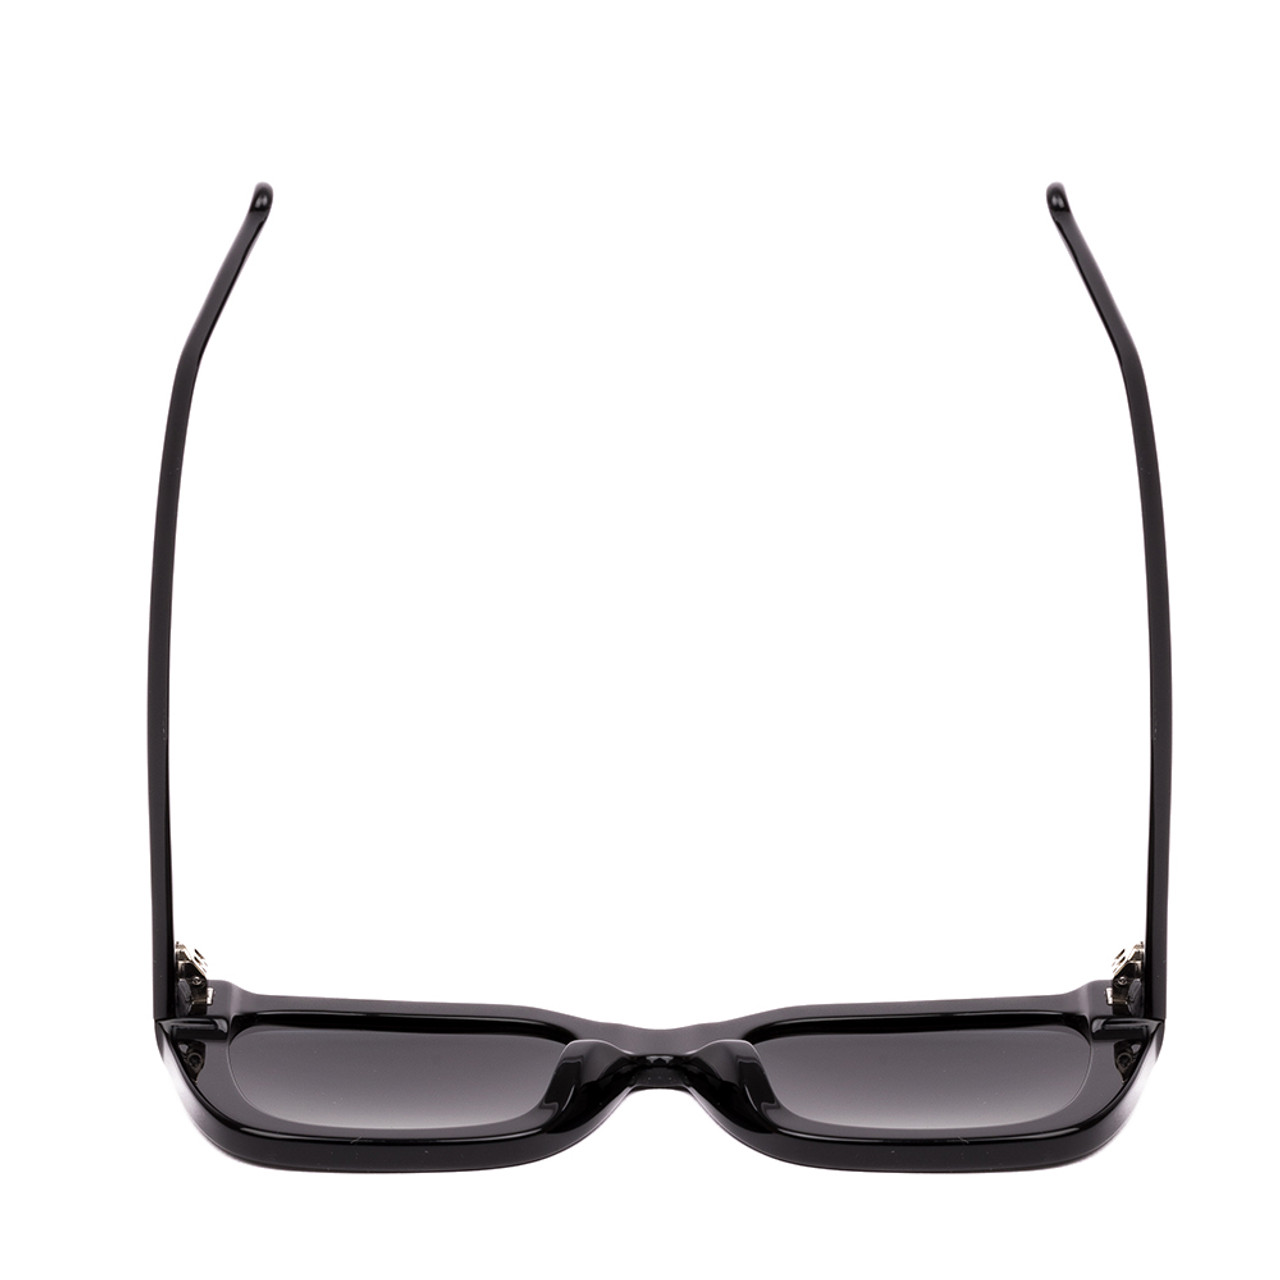 Top View of SITO SHADES HARLOW Womens Square Full Rim Designer Sunglasses in Black/Gray 52mm